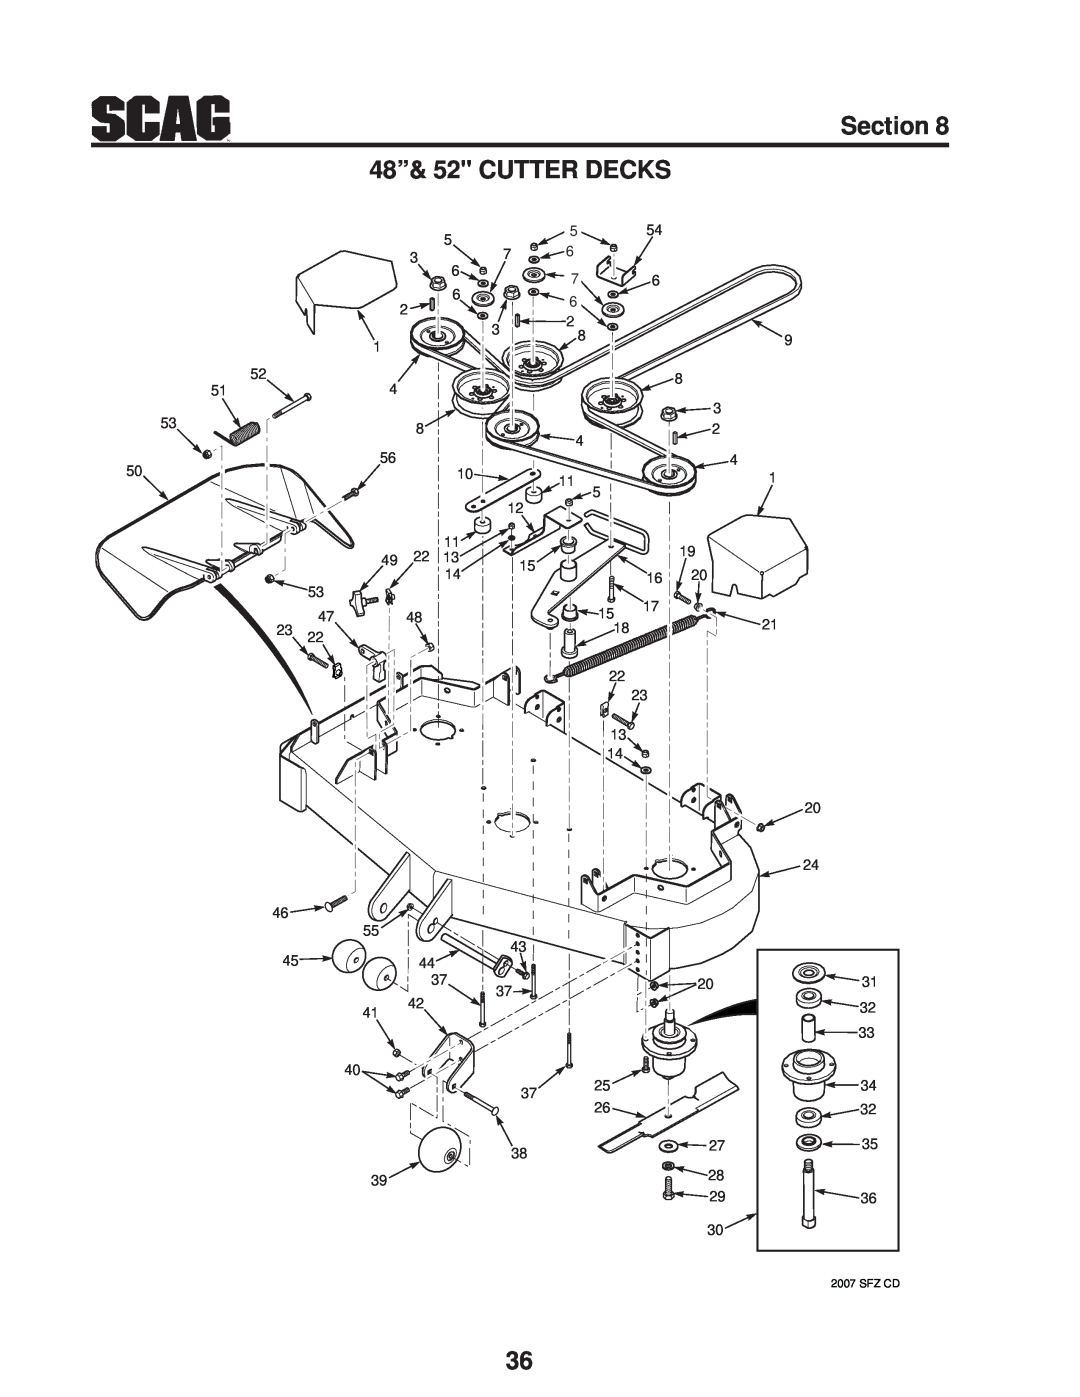 Scag Power Equipment SFZ manual ”& 52 CUTTER DECKS, Sfz Cd 